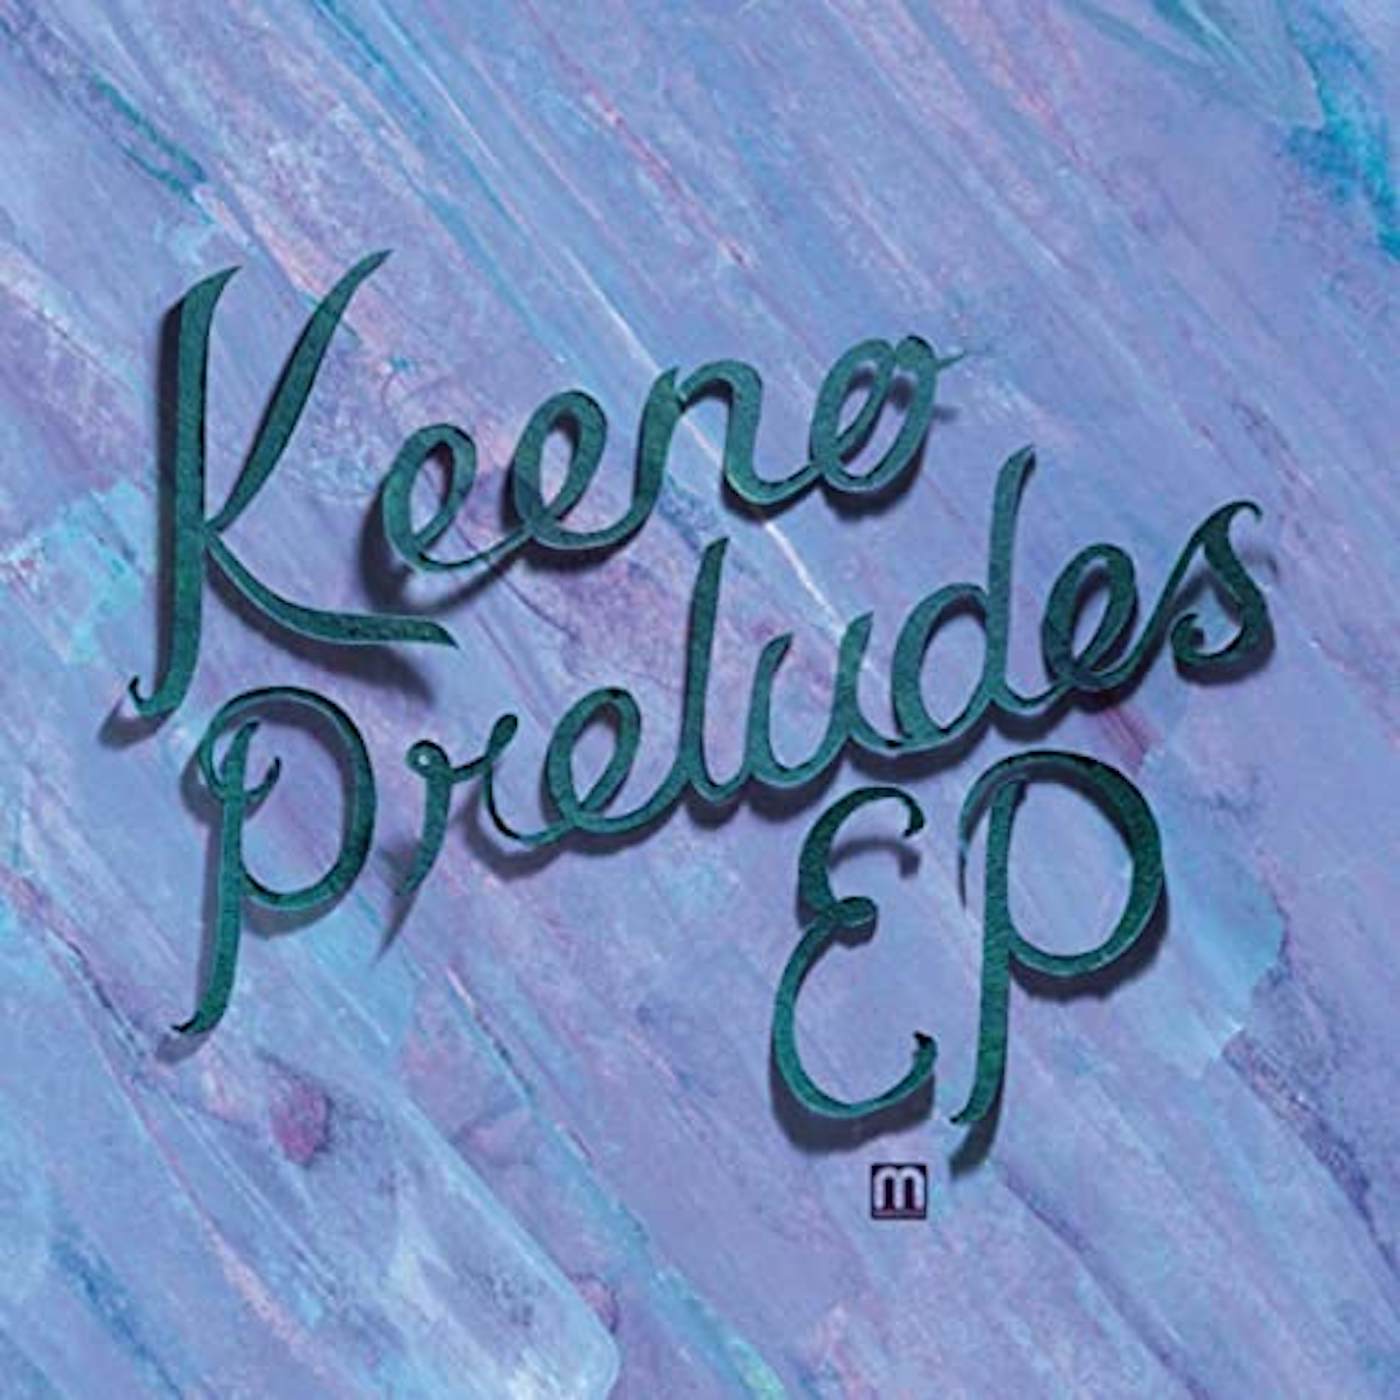 Keeno Preludes Ep Vinyl Record